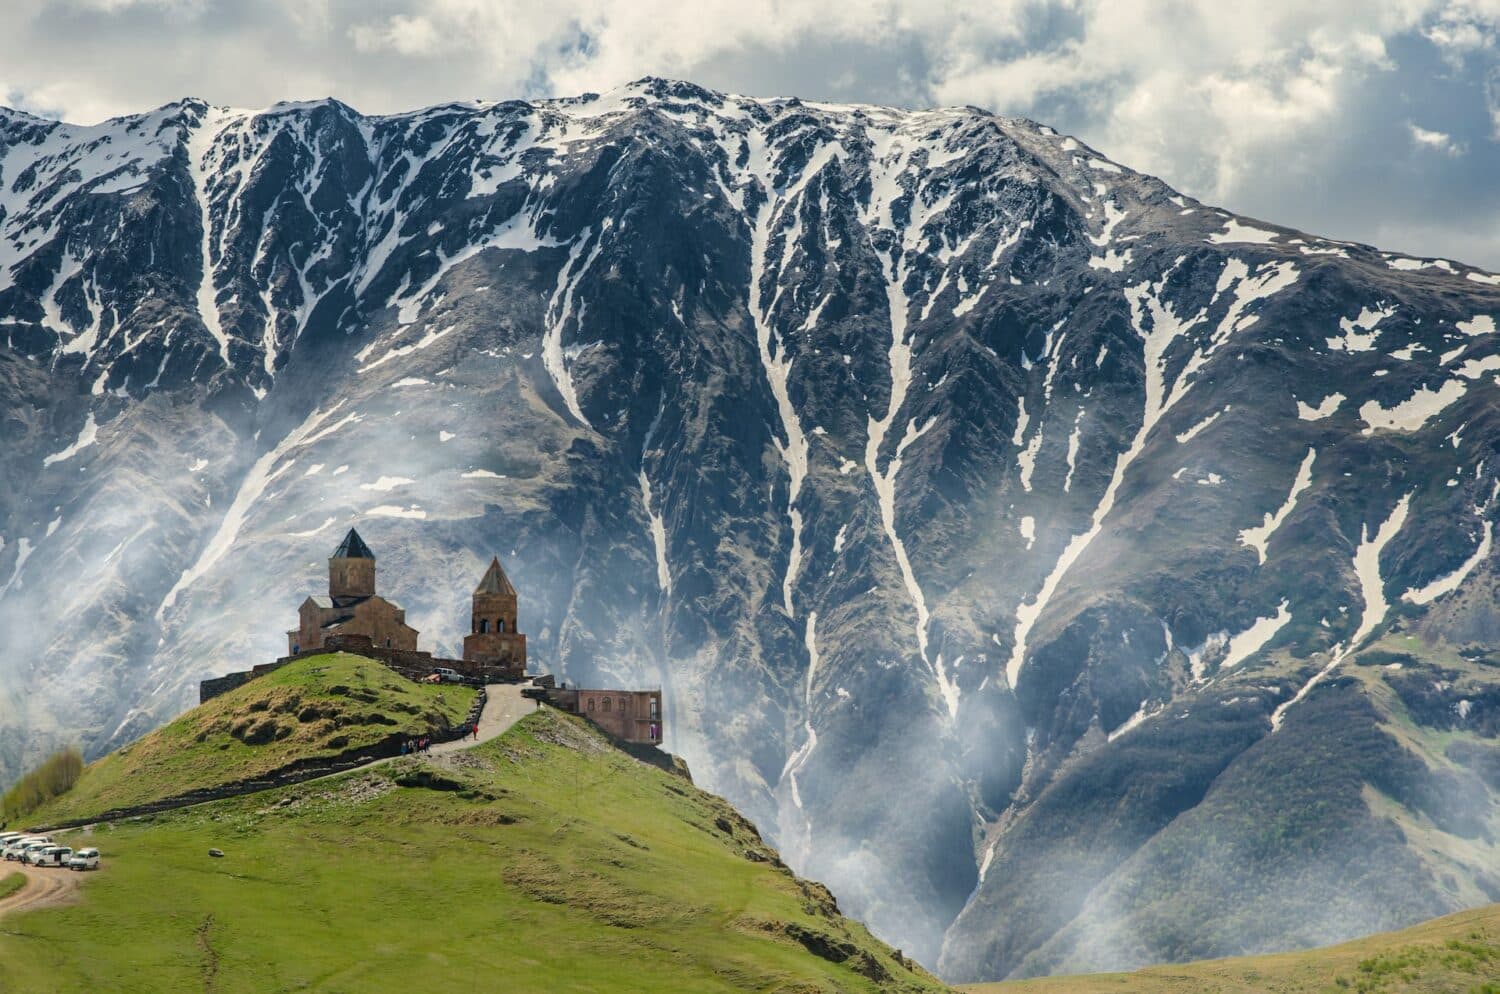 Foto da Igreja da Trindade Gergeti com uma montanha nevada ao fundo - Foto: Iman Gozal via Unsplash